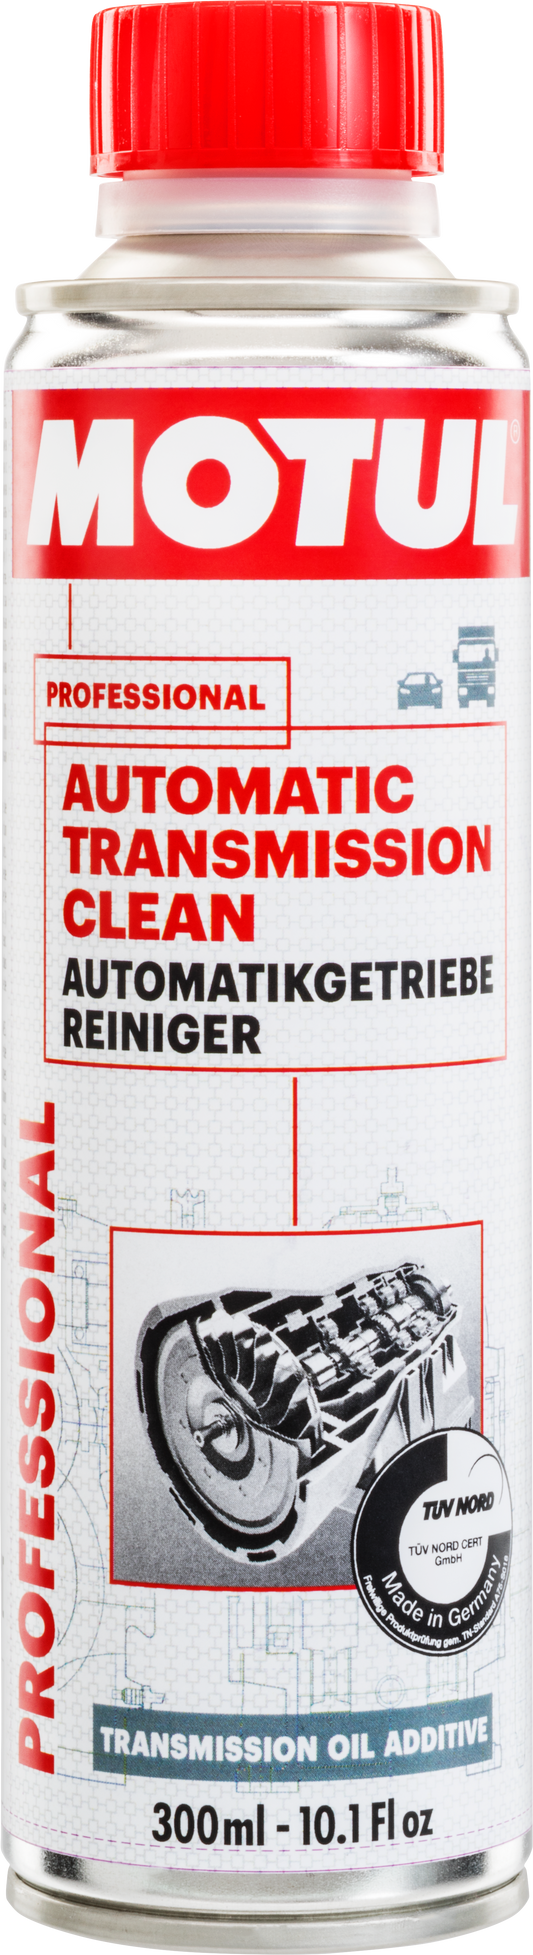 Motul AUTOMATIC TRANSMISSION CLEAN, 300ml